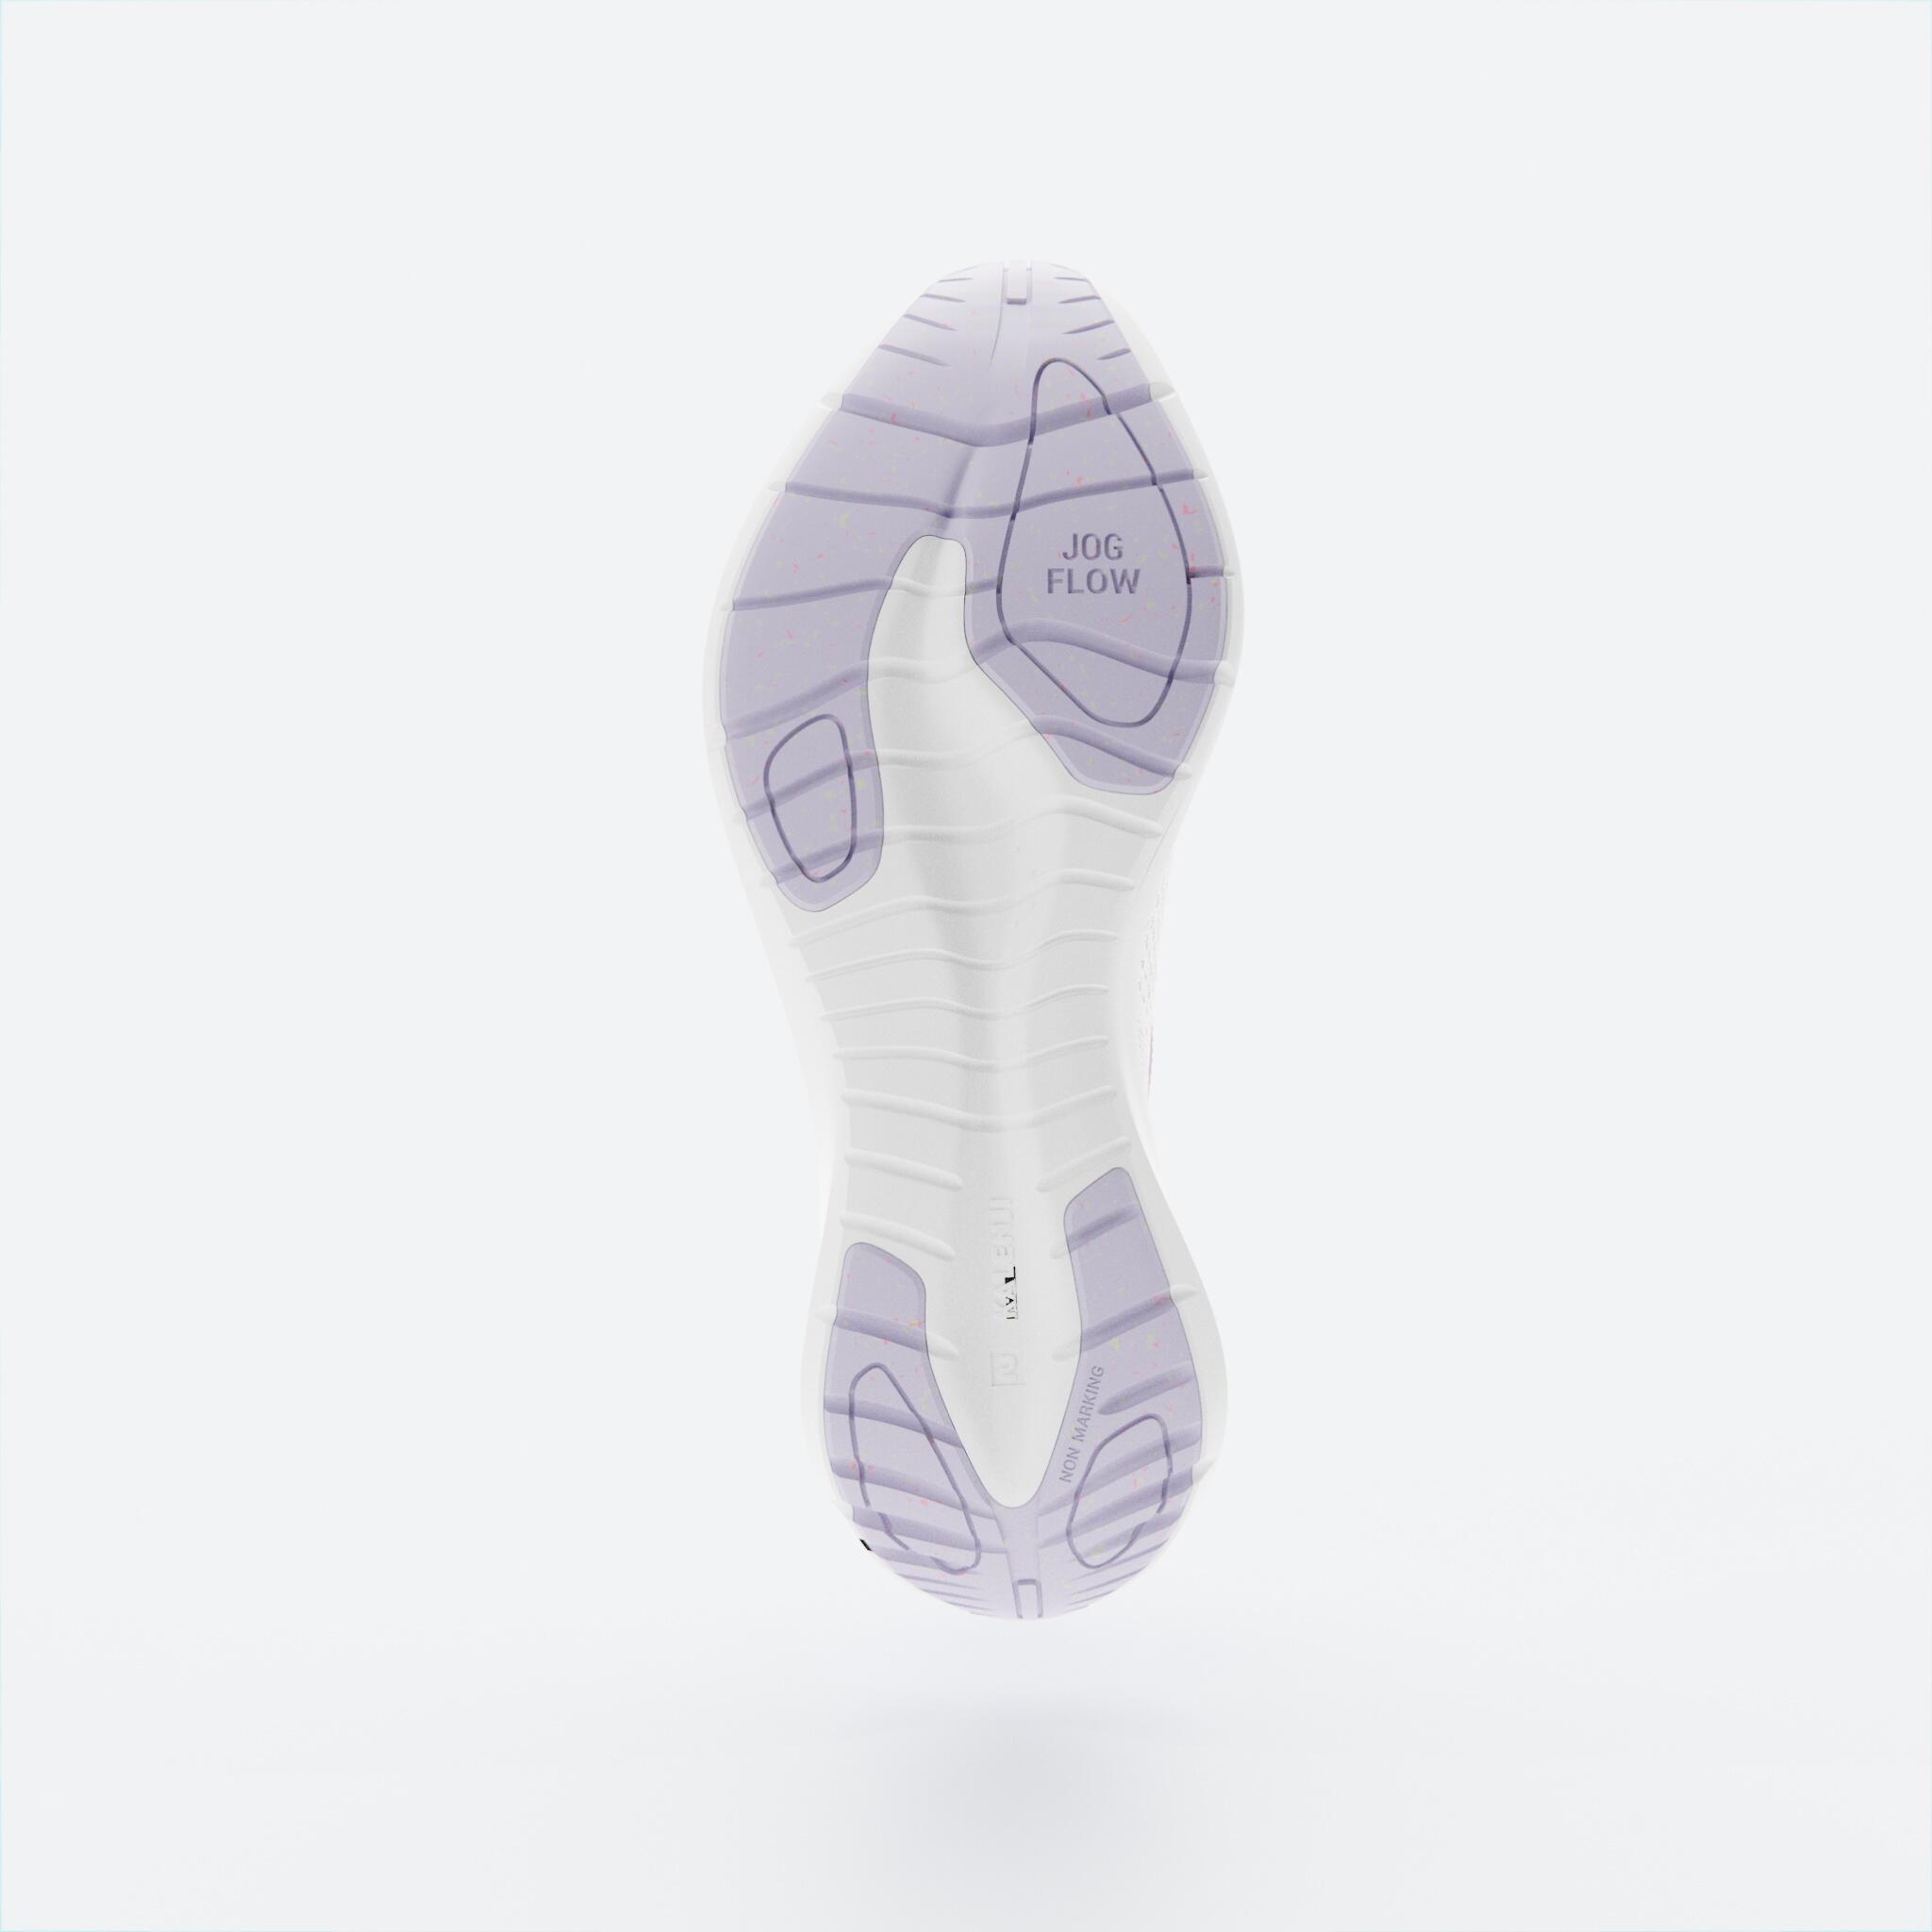 JOGFLOW 190.1 Women's Running Shoes - White/Purple 7/7